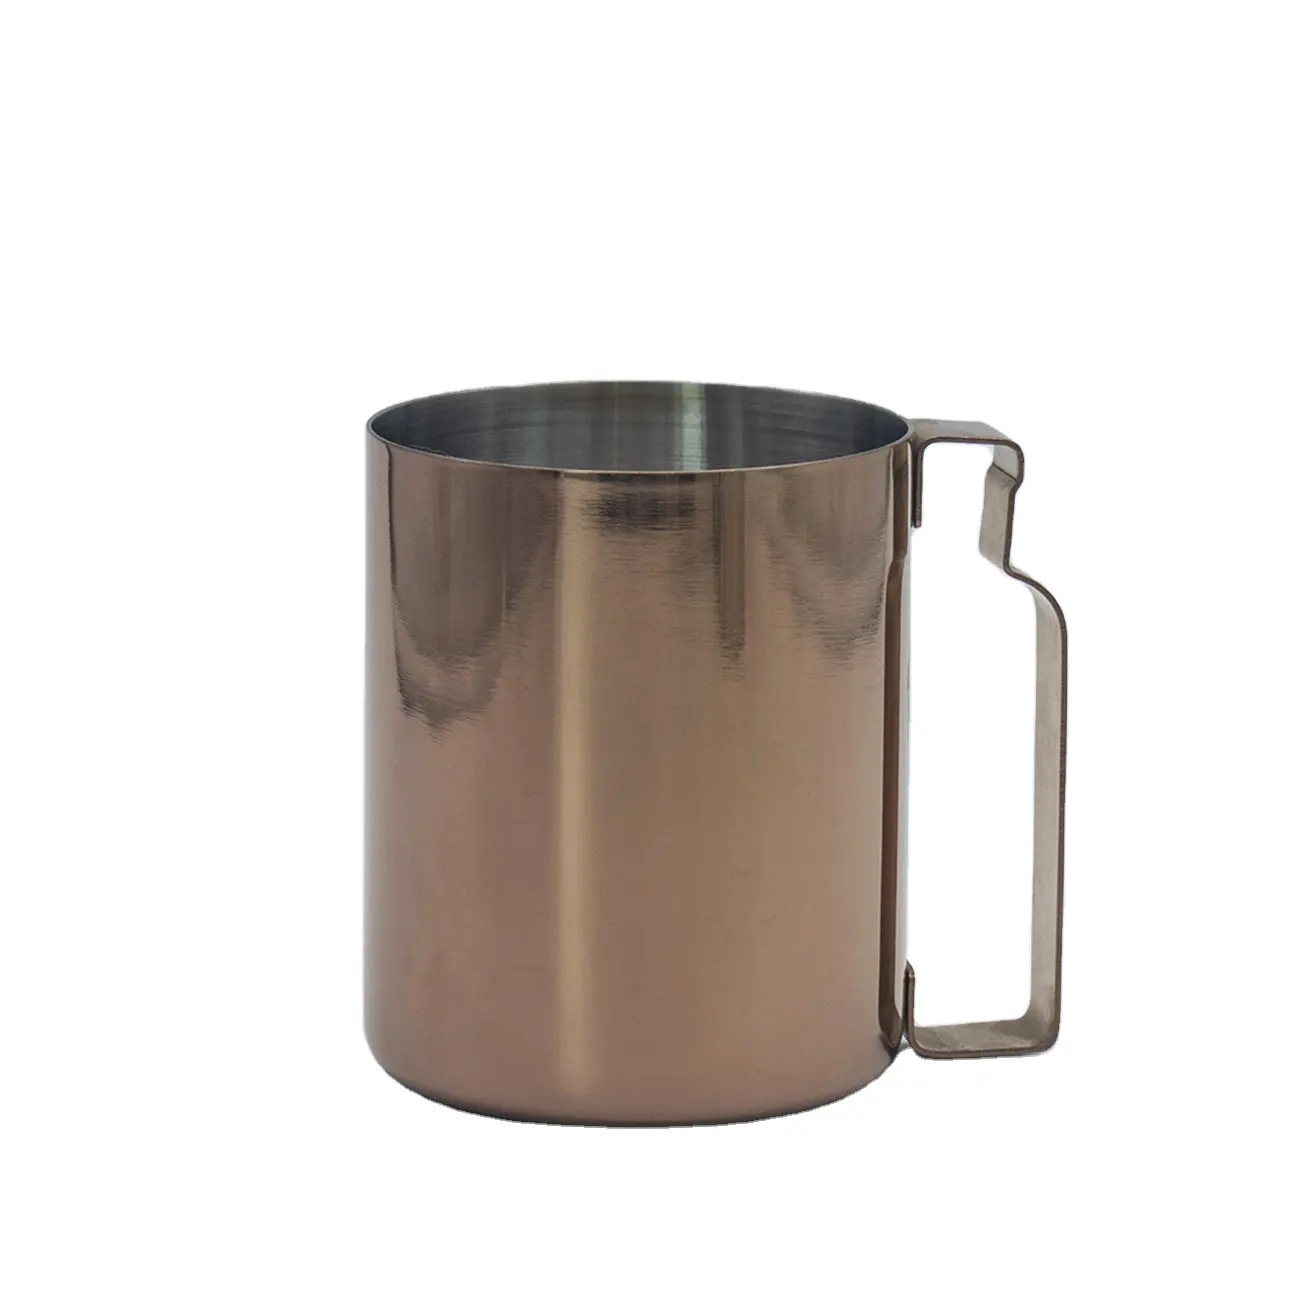 304 stainless steel Absolut mule mug , Moscow mule mug, shot glass